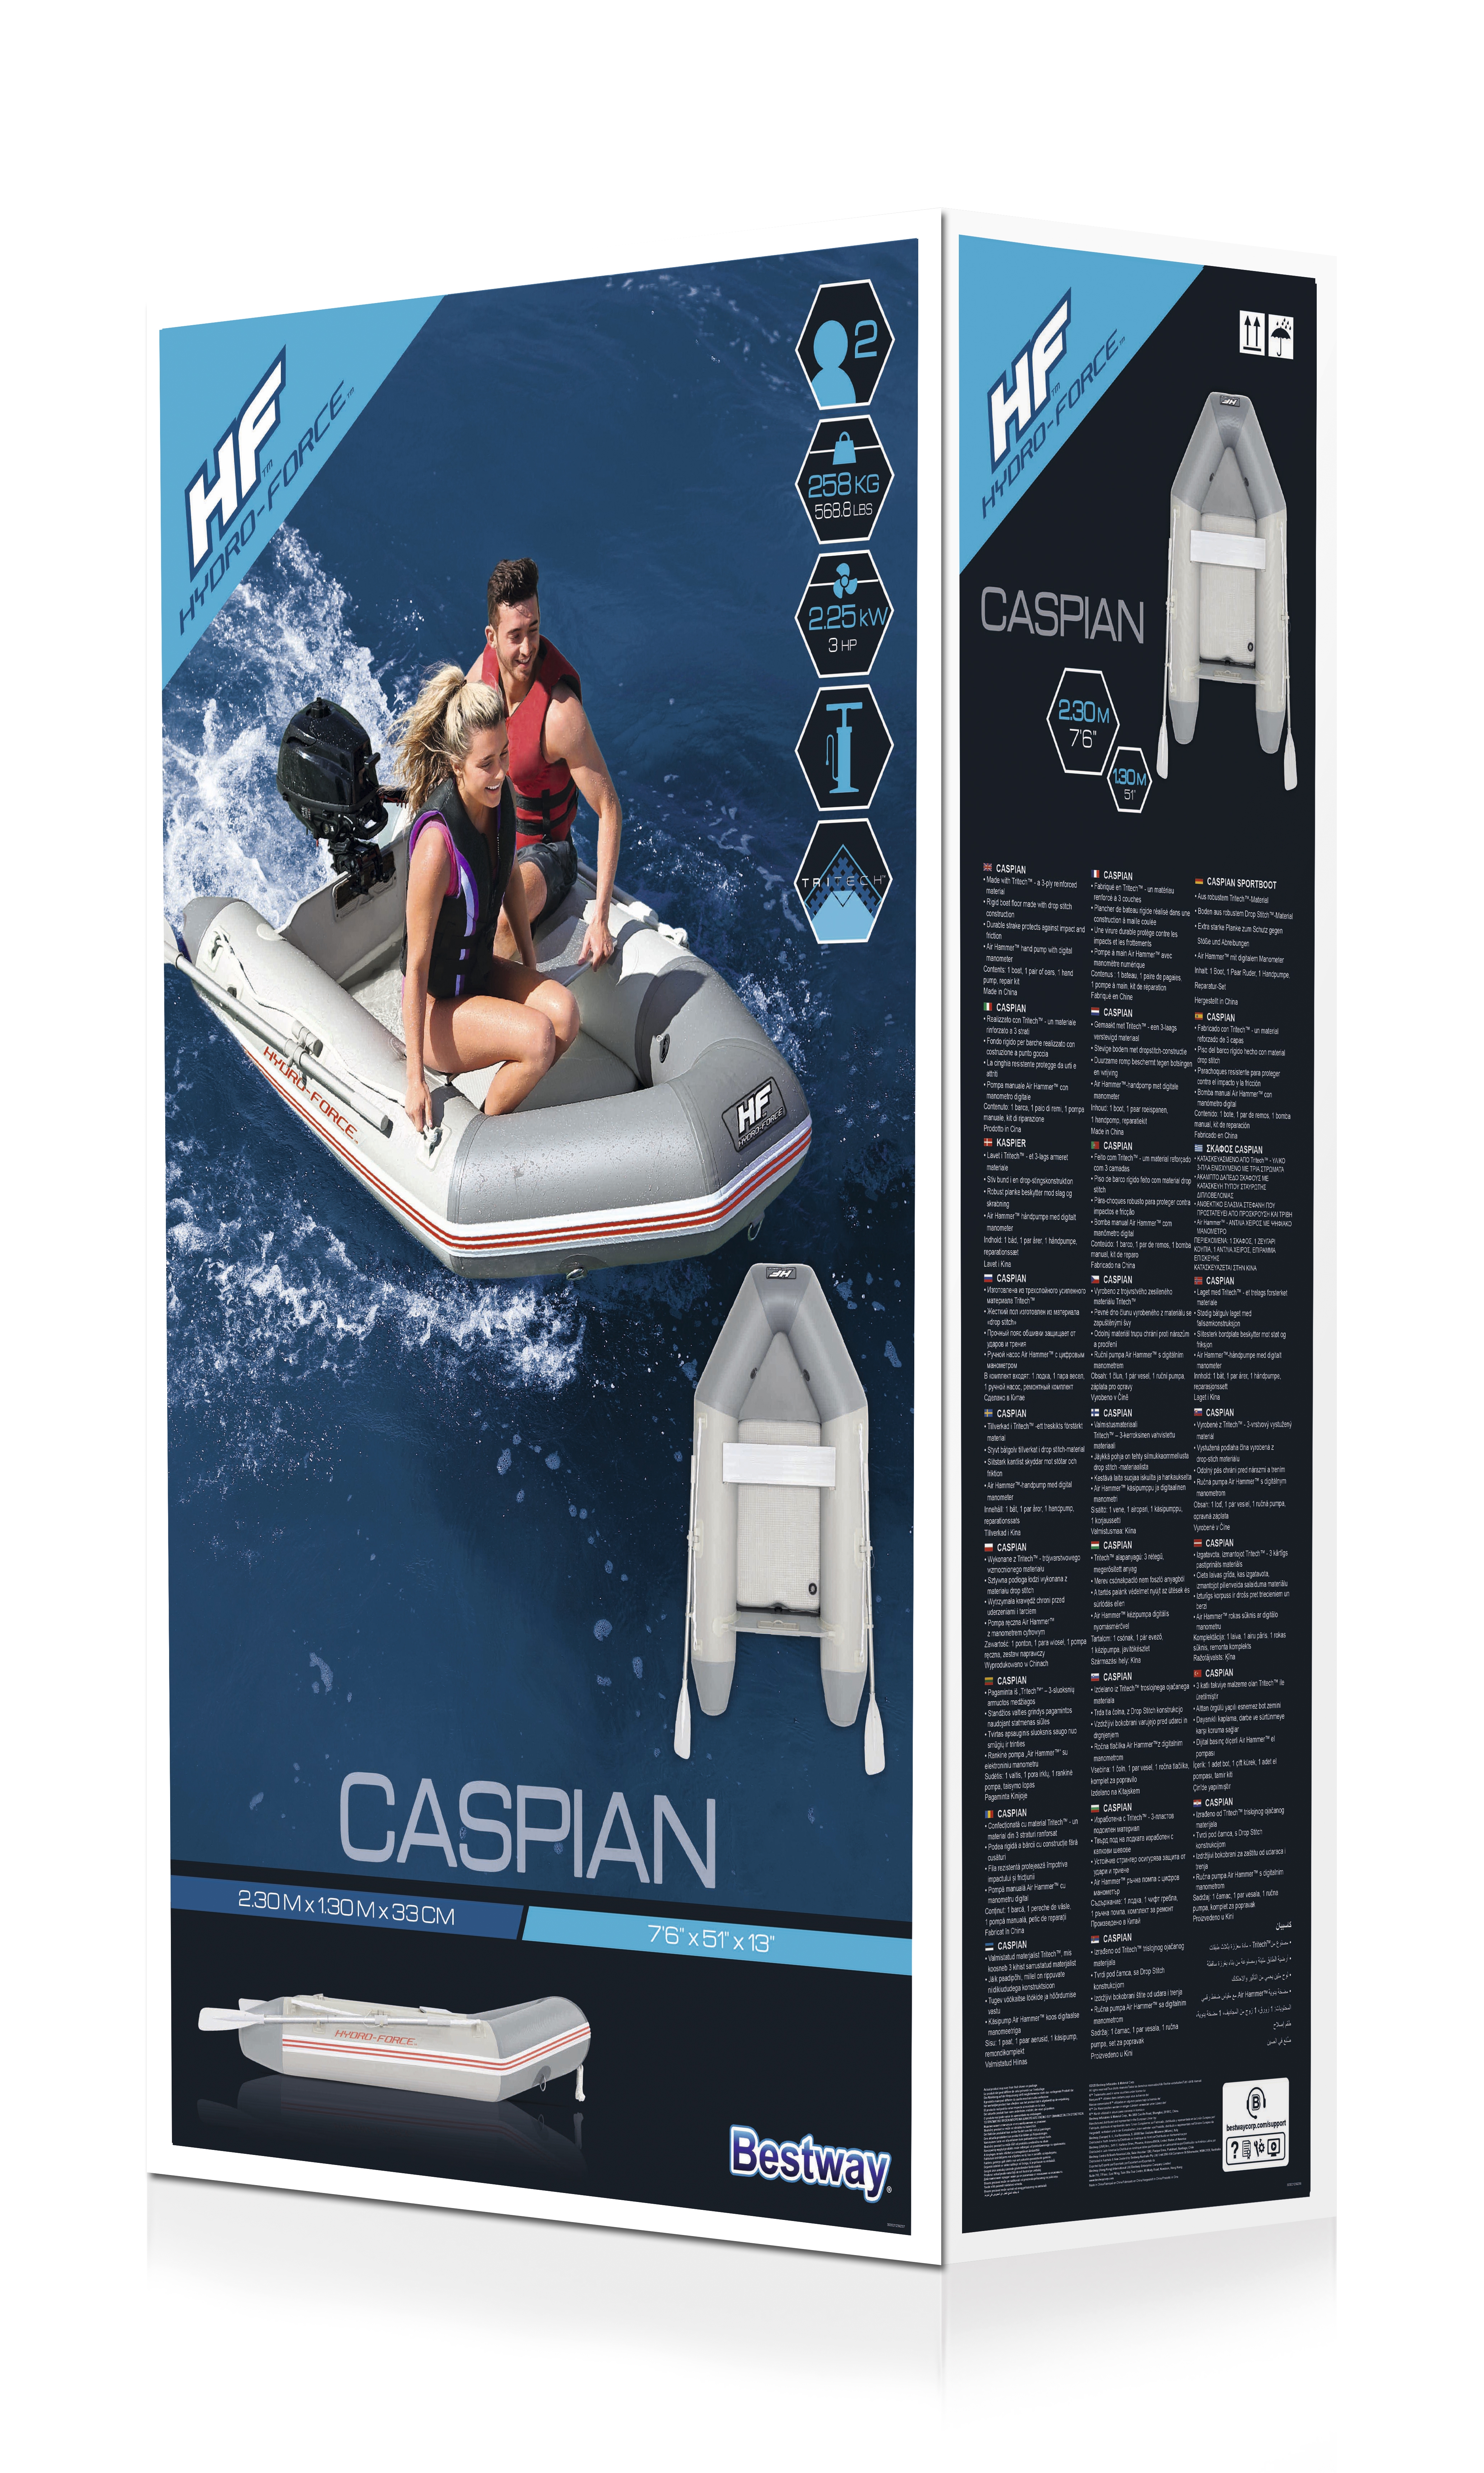 Надувная лодка "Caspian" 230х130х33см с жёстким дном, вёсла 145см, насос, транец, до 258кг, Bestway 65046 BW